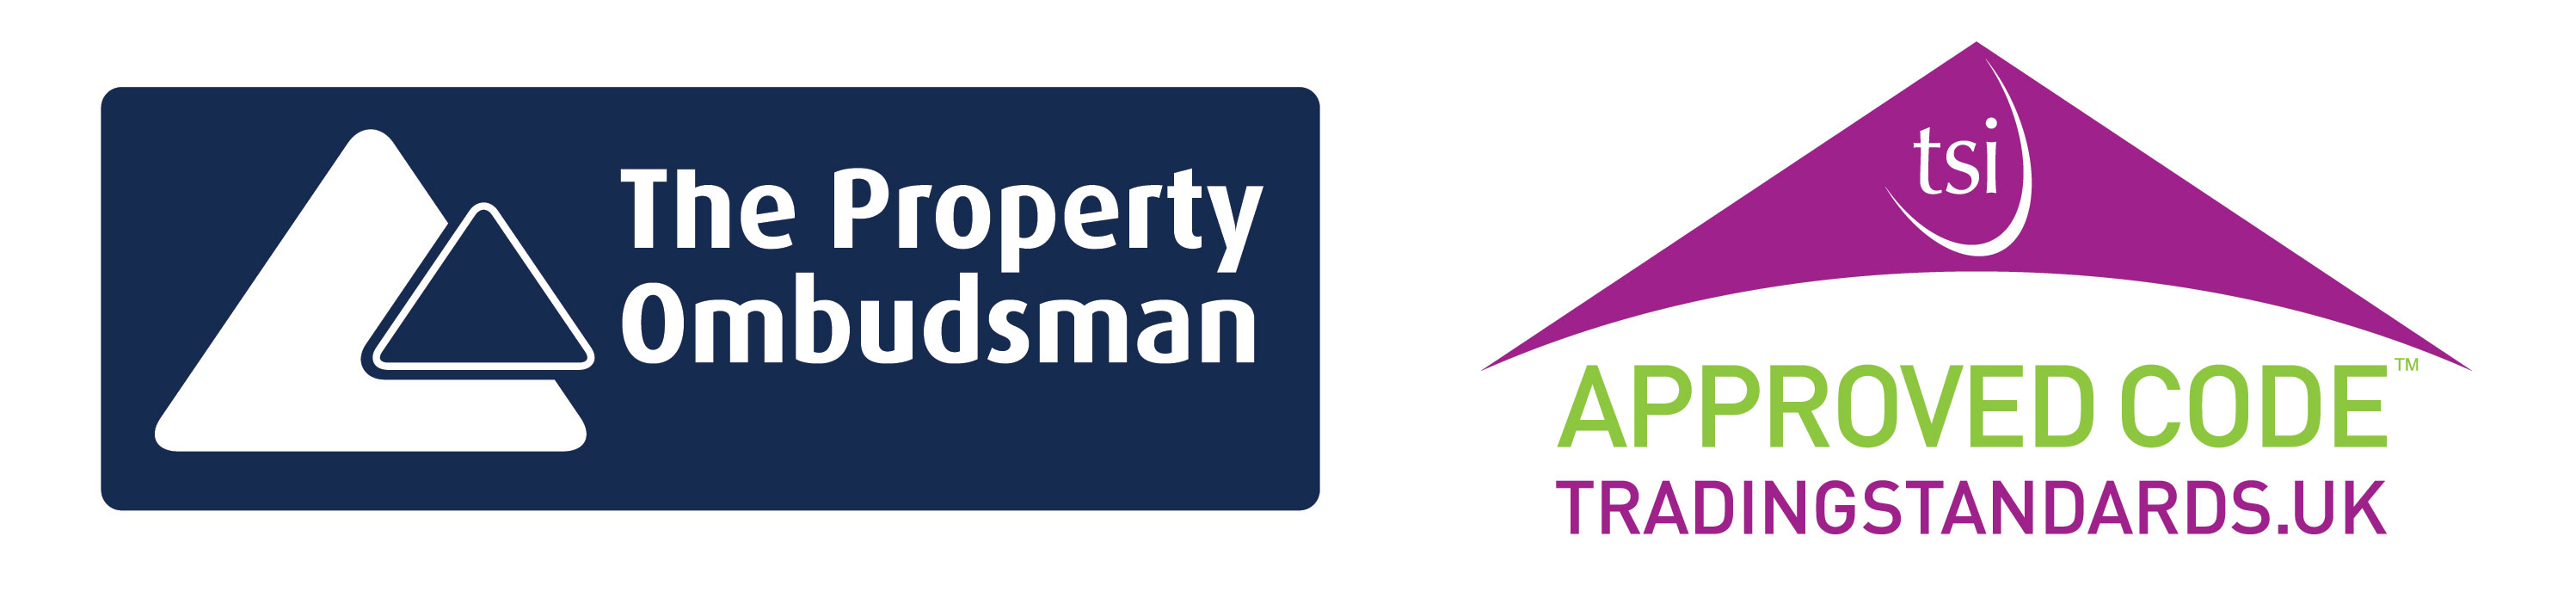 The property ombudsman & TSI